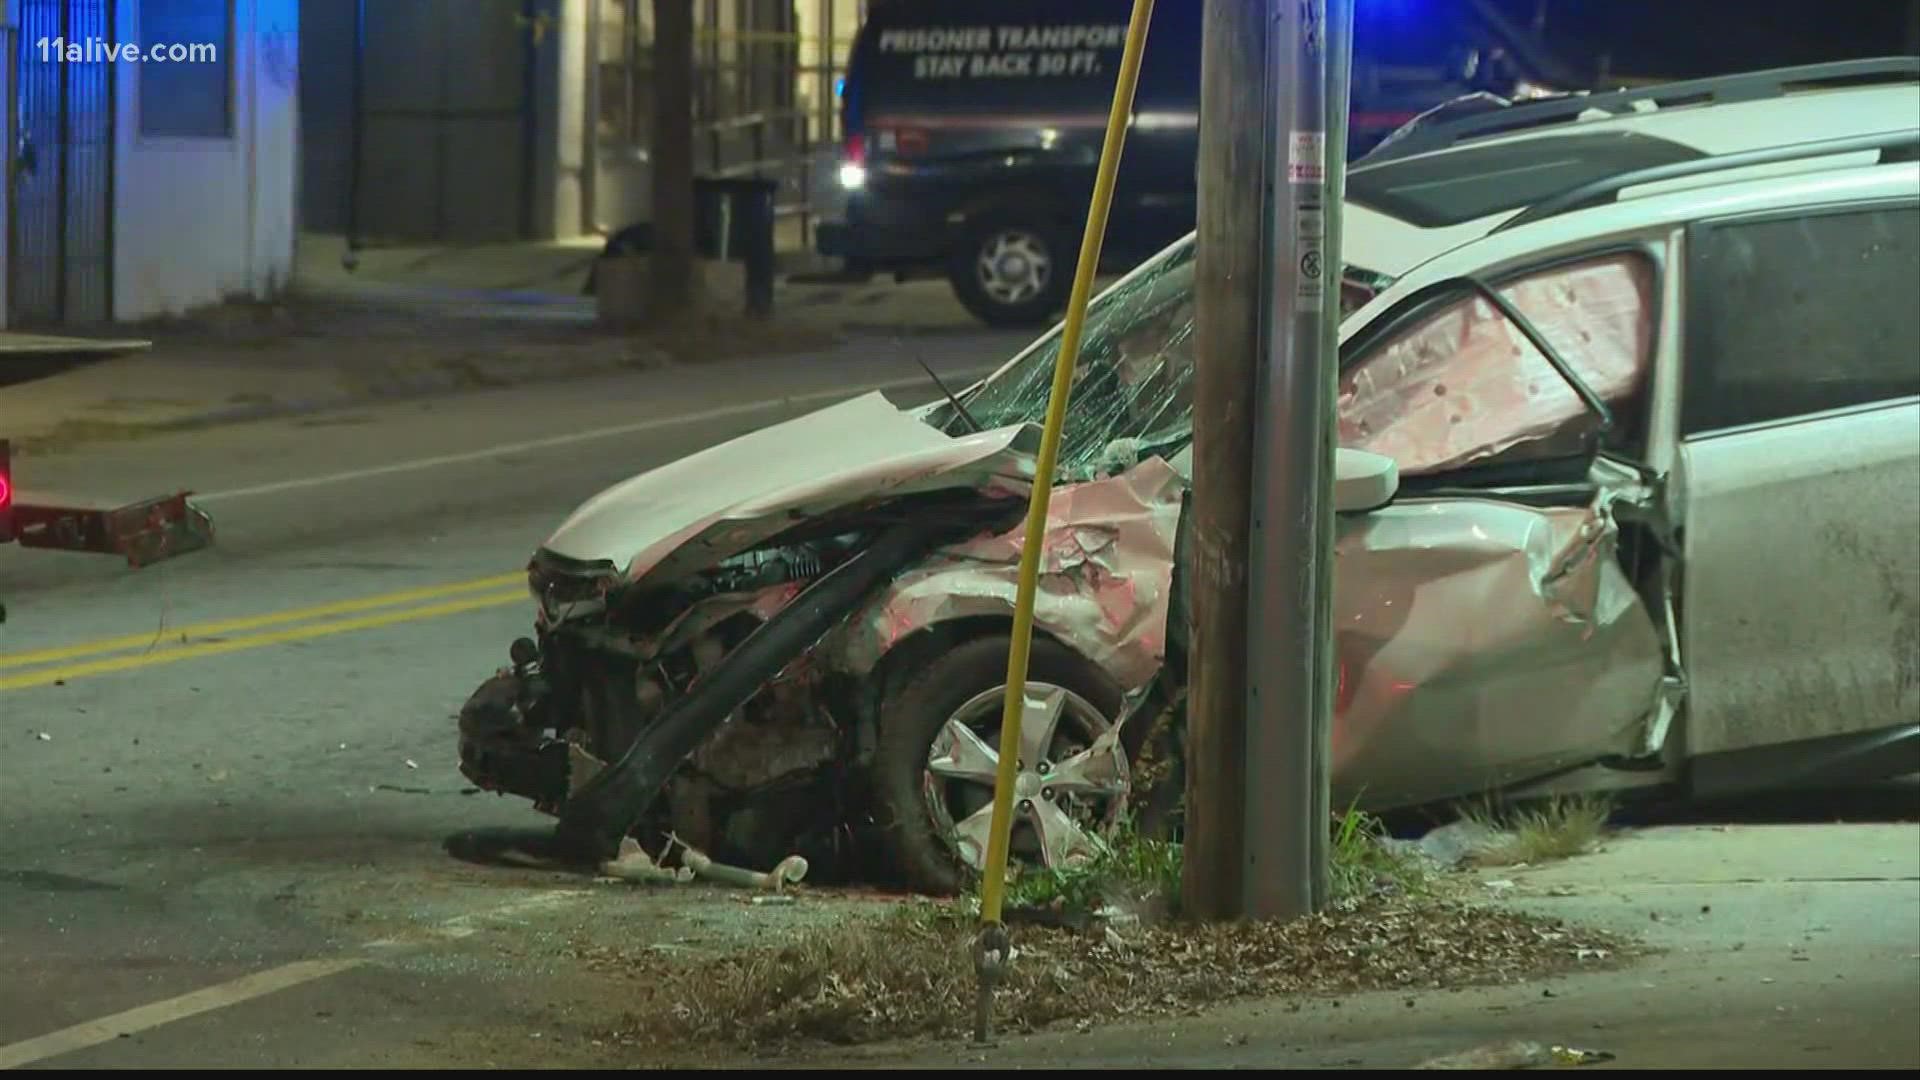 Highspeed chase ends multiple vehicle crash in southwest Atlanta